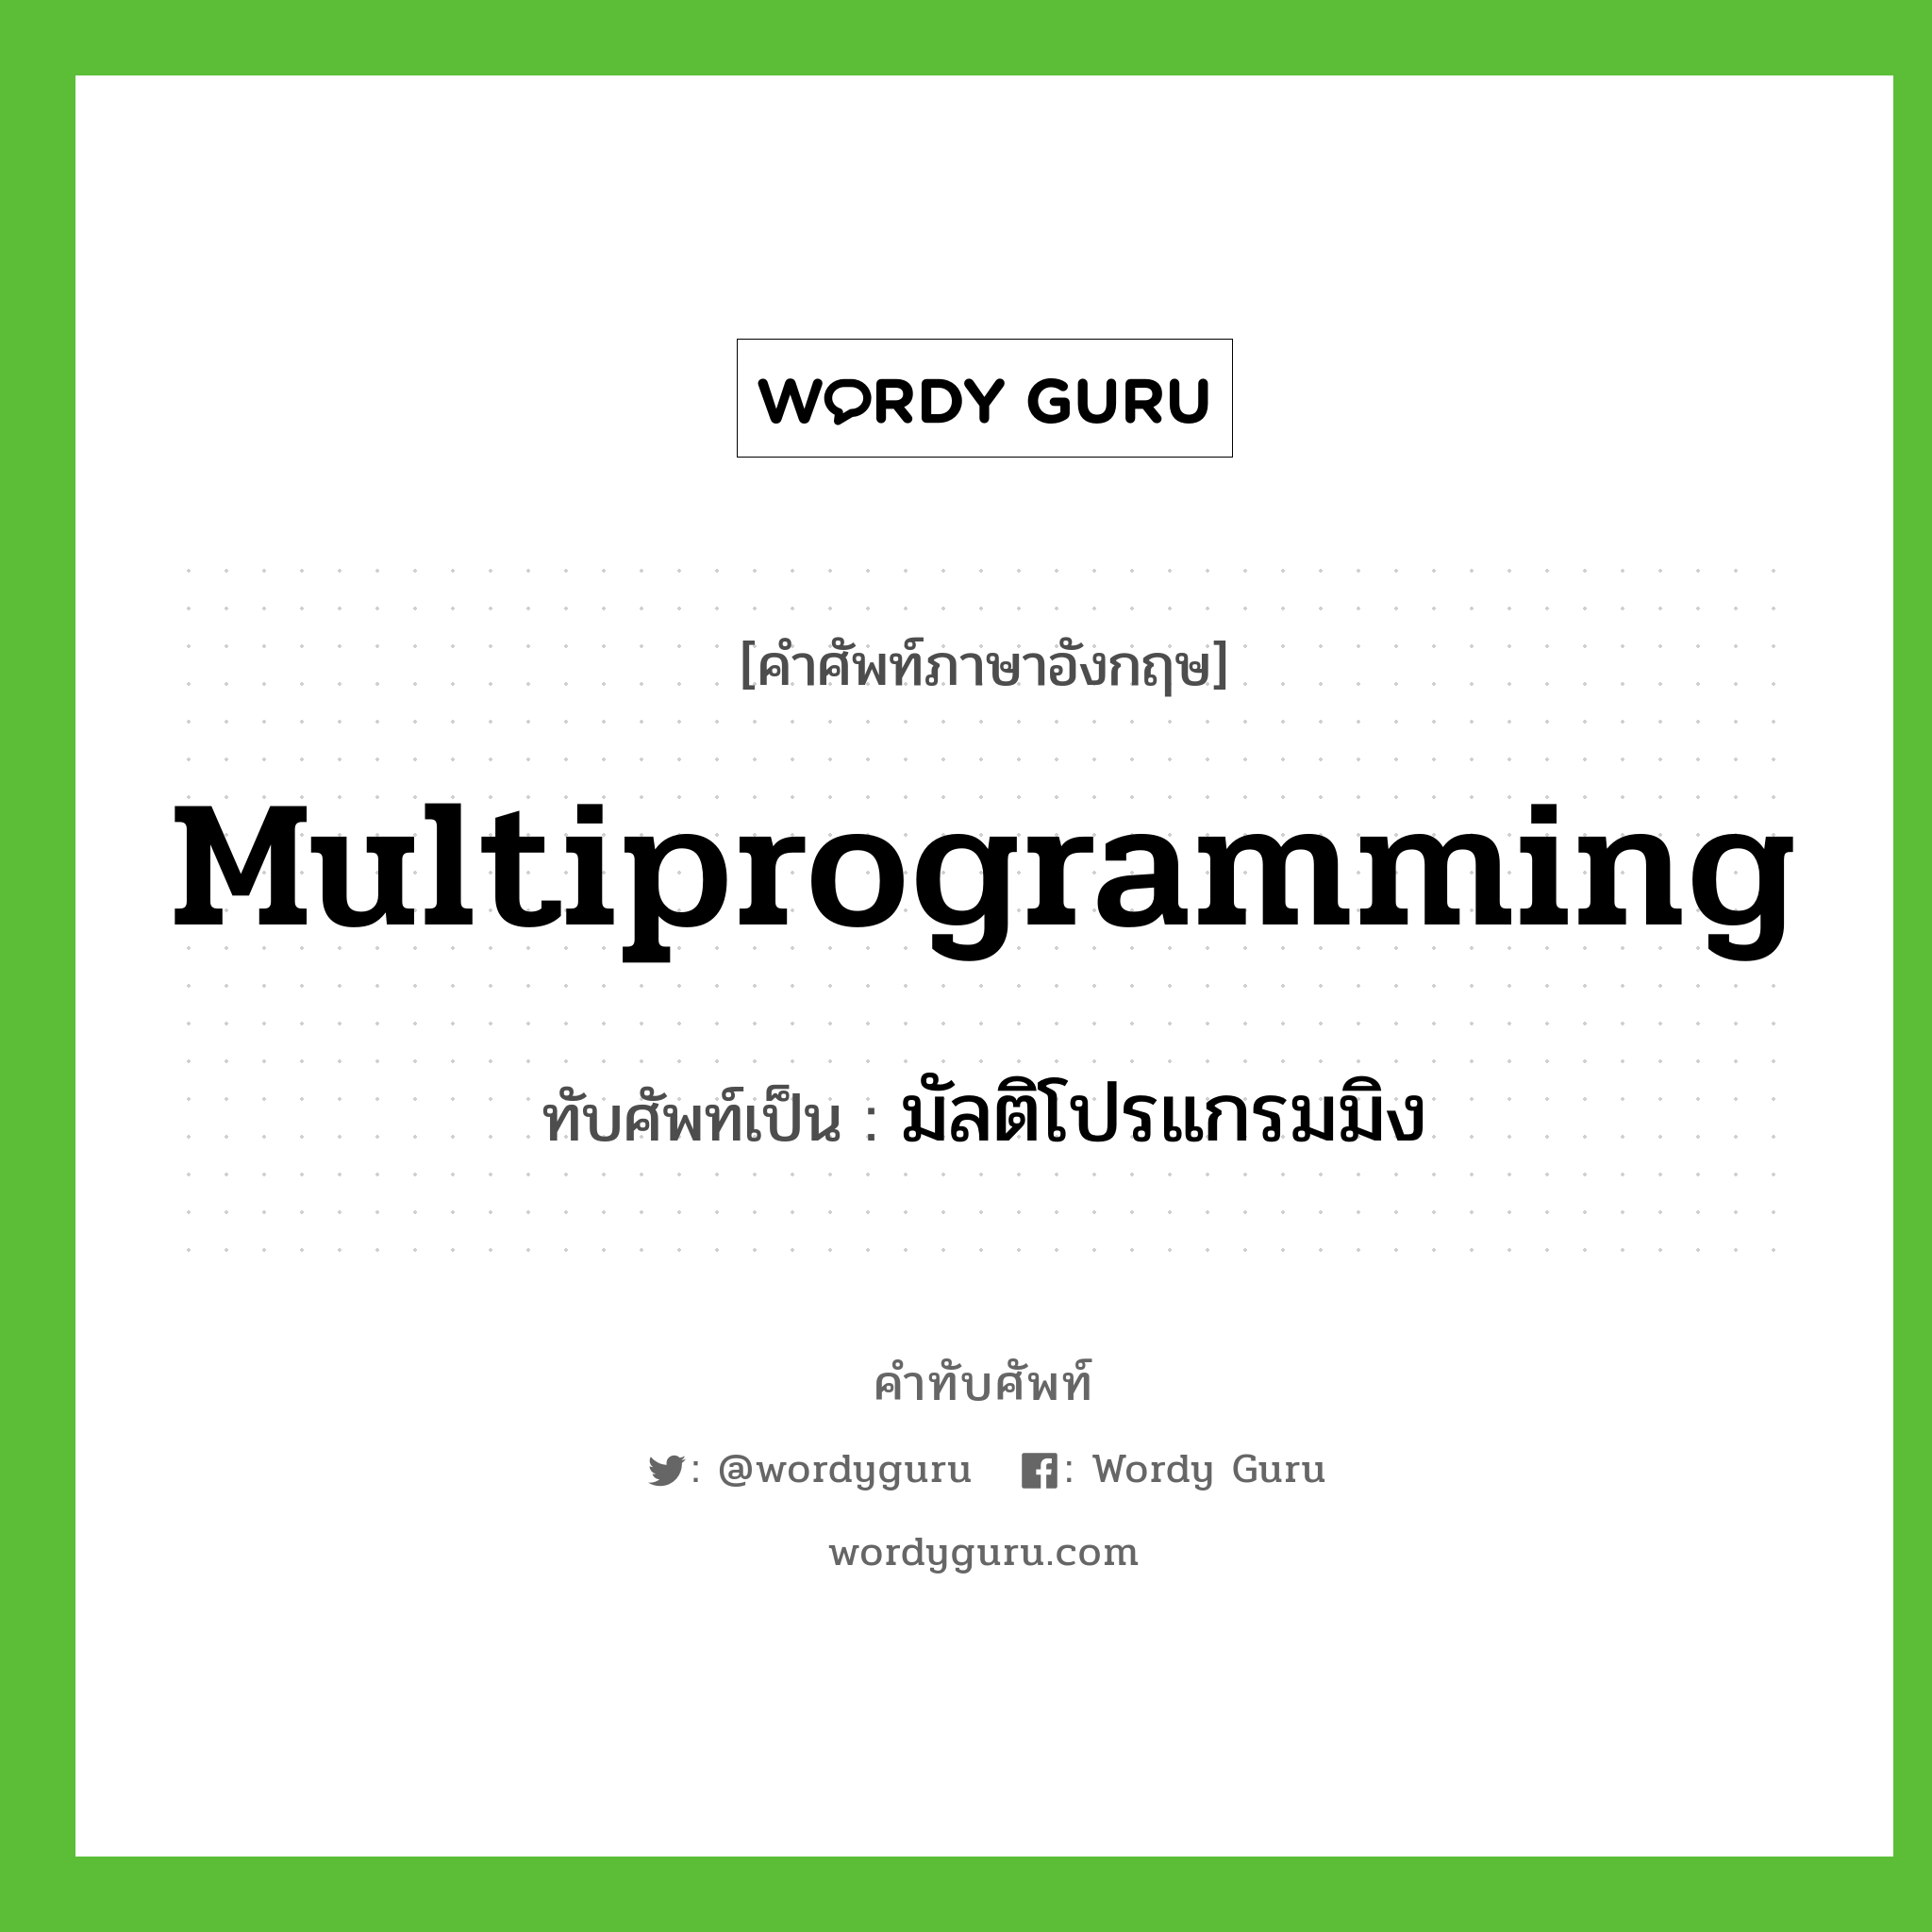 multiprogramming เขียนเป็นคำไทยว่าอะไร?, คำศัพท์ภาษาอังกฤษ multiprogramming ทับศัพท์เป็น มัลติโปรแกรมมิง